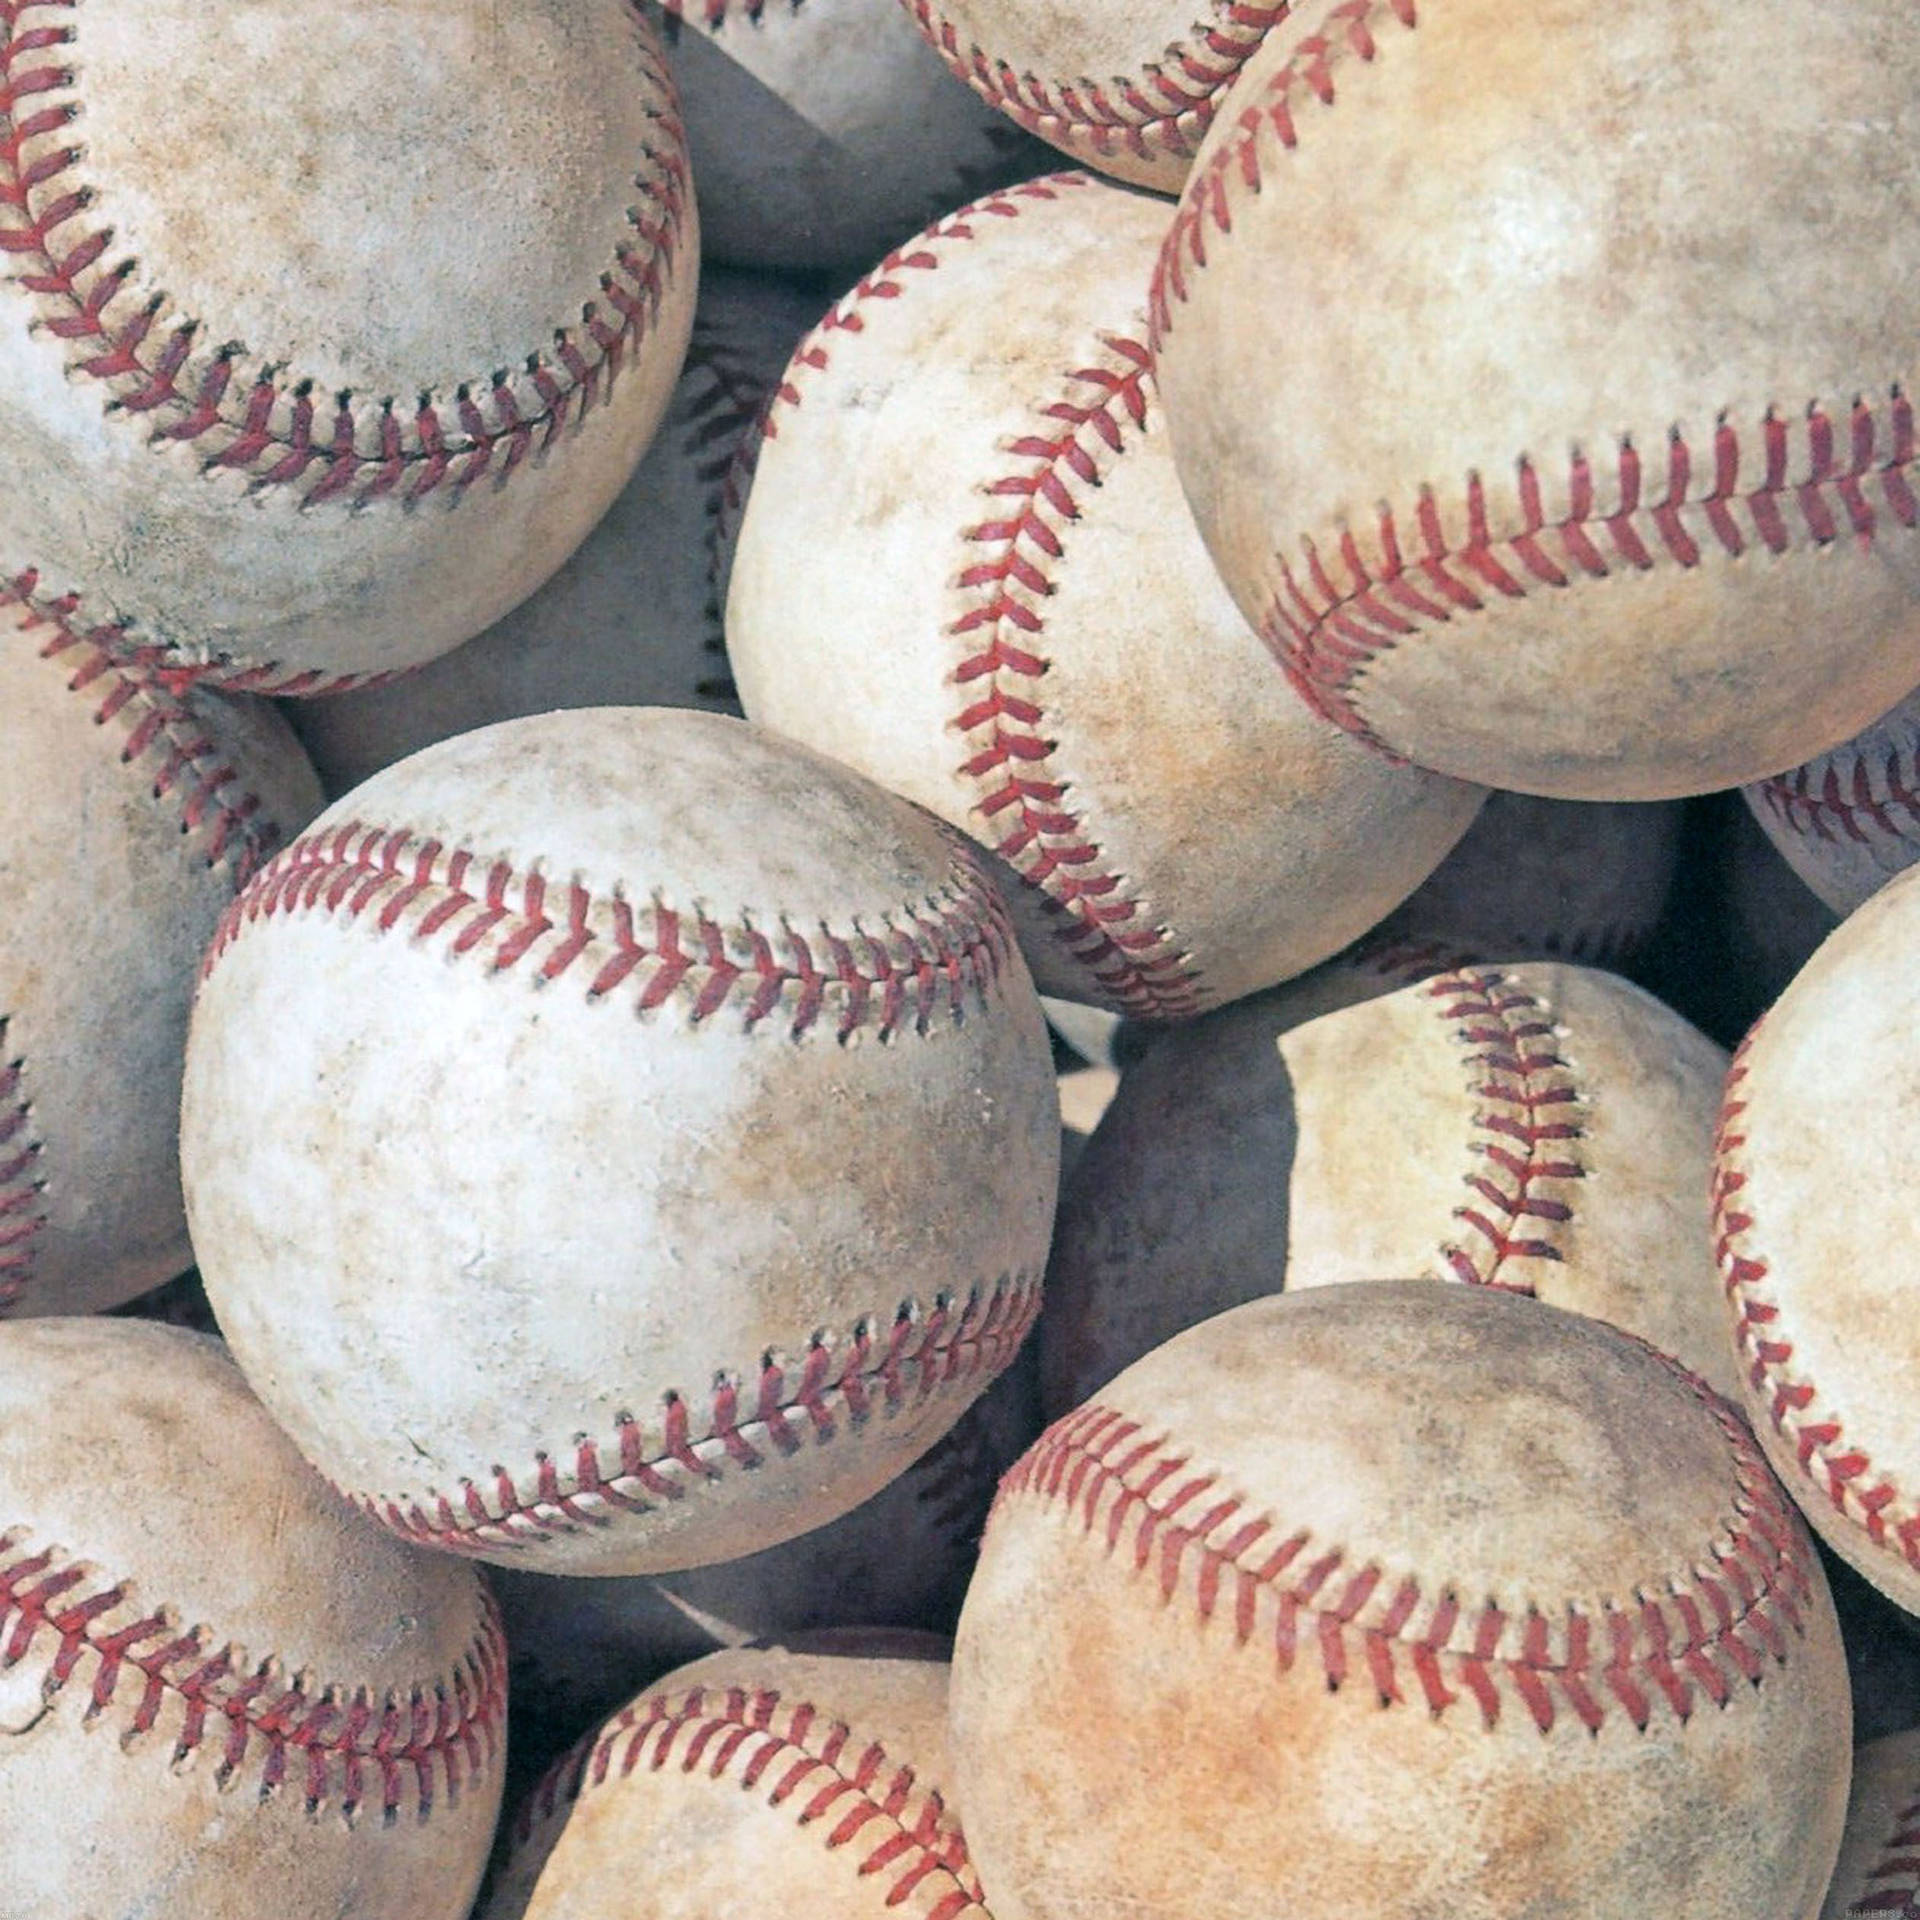 Dirty Baseball Pile